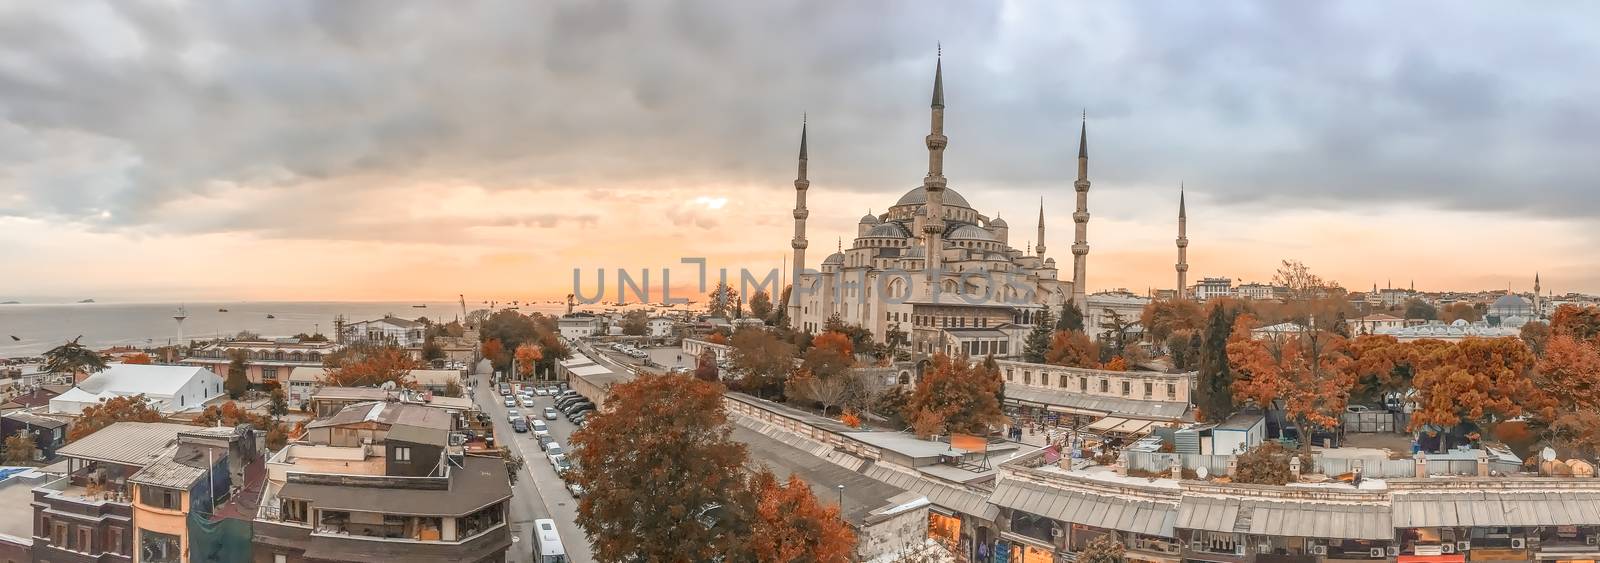 Istanbul - City panoramic skyline by jovannig